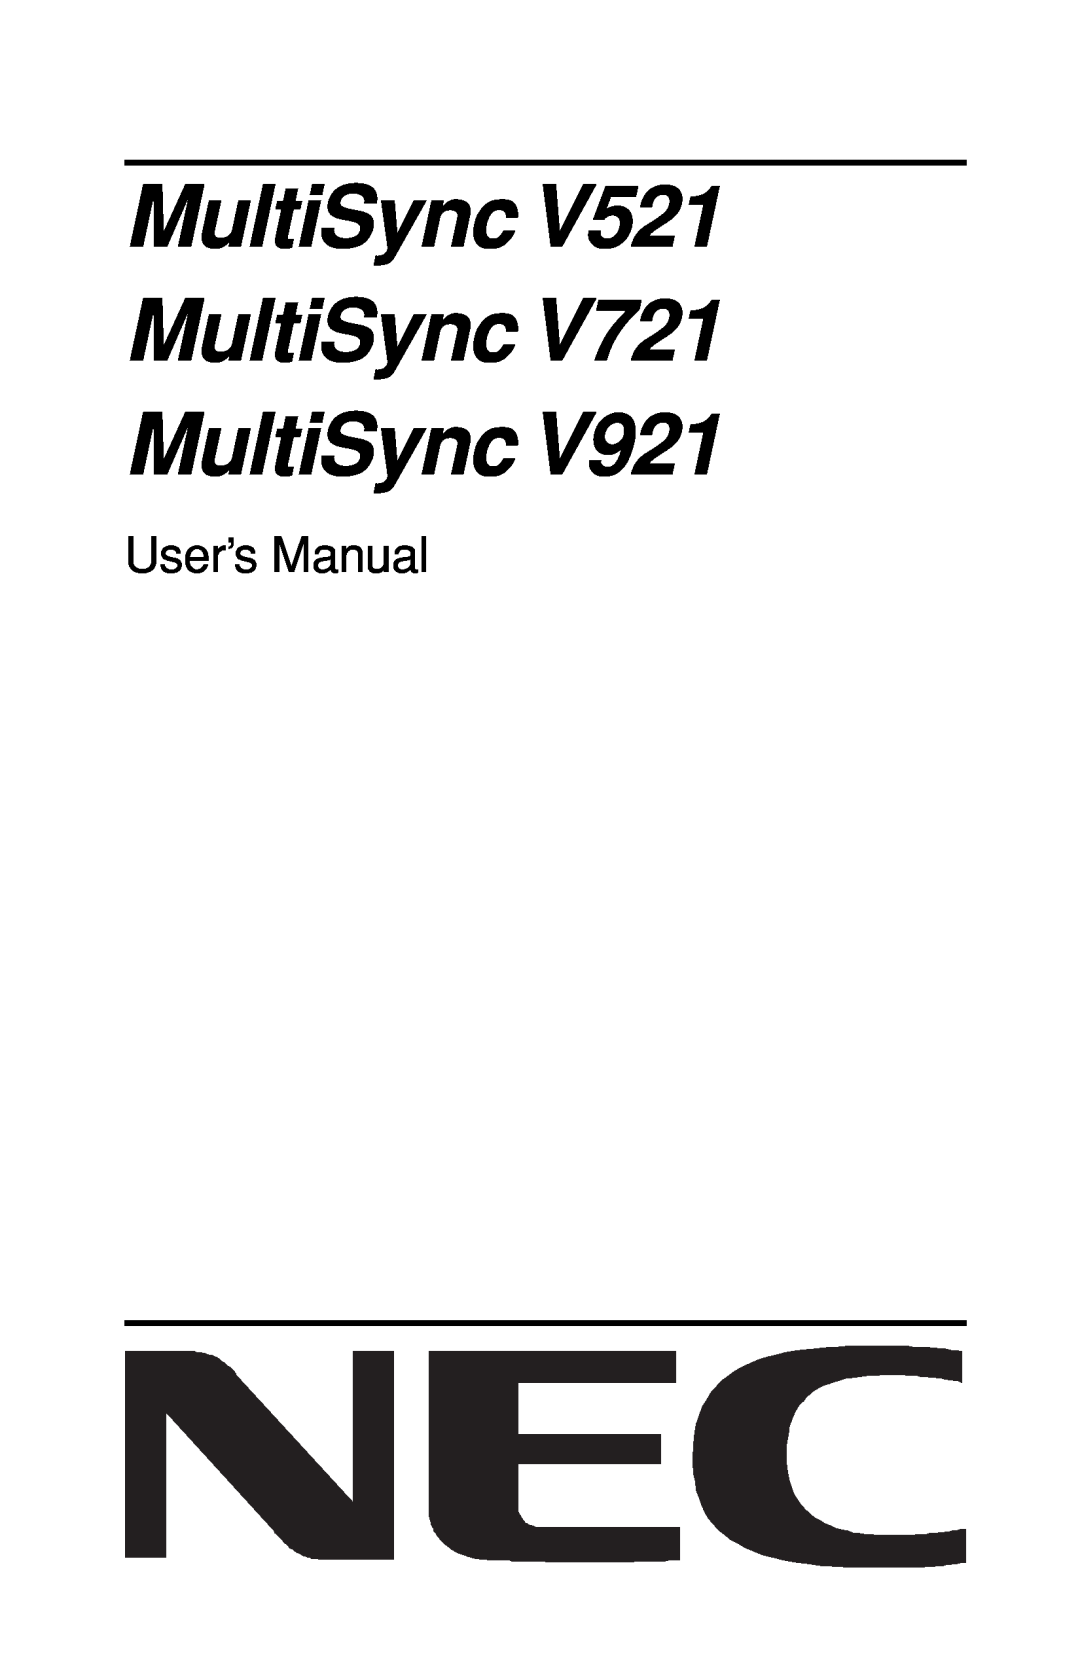 NEC 60000531 user manual MultiSync MultiSync MultiSync, User’s Manual 